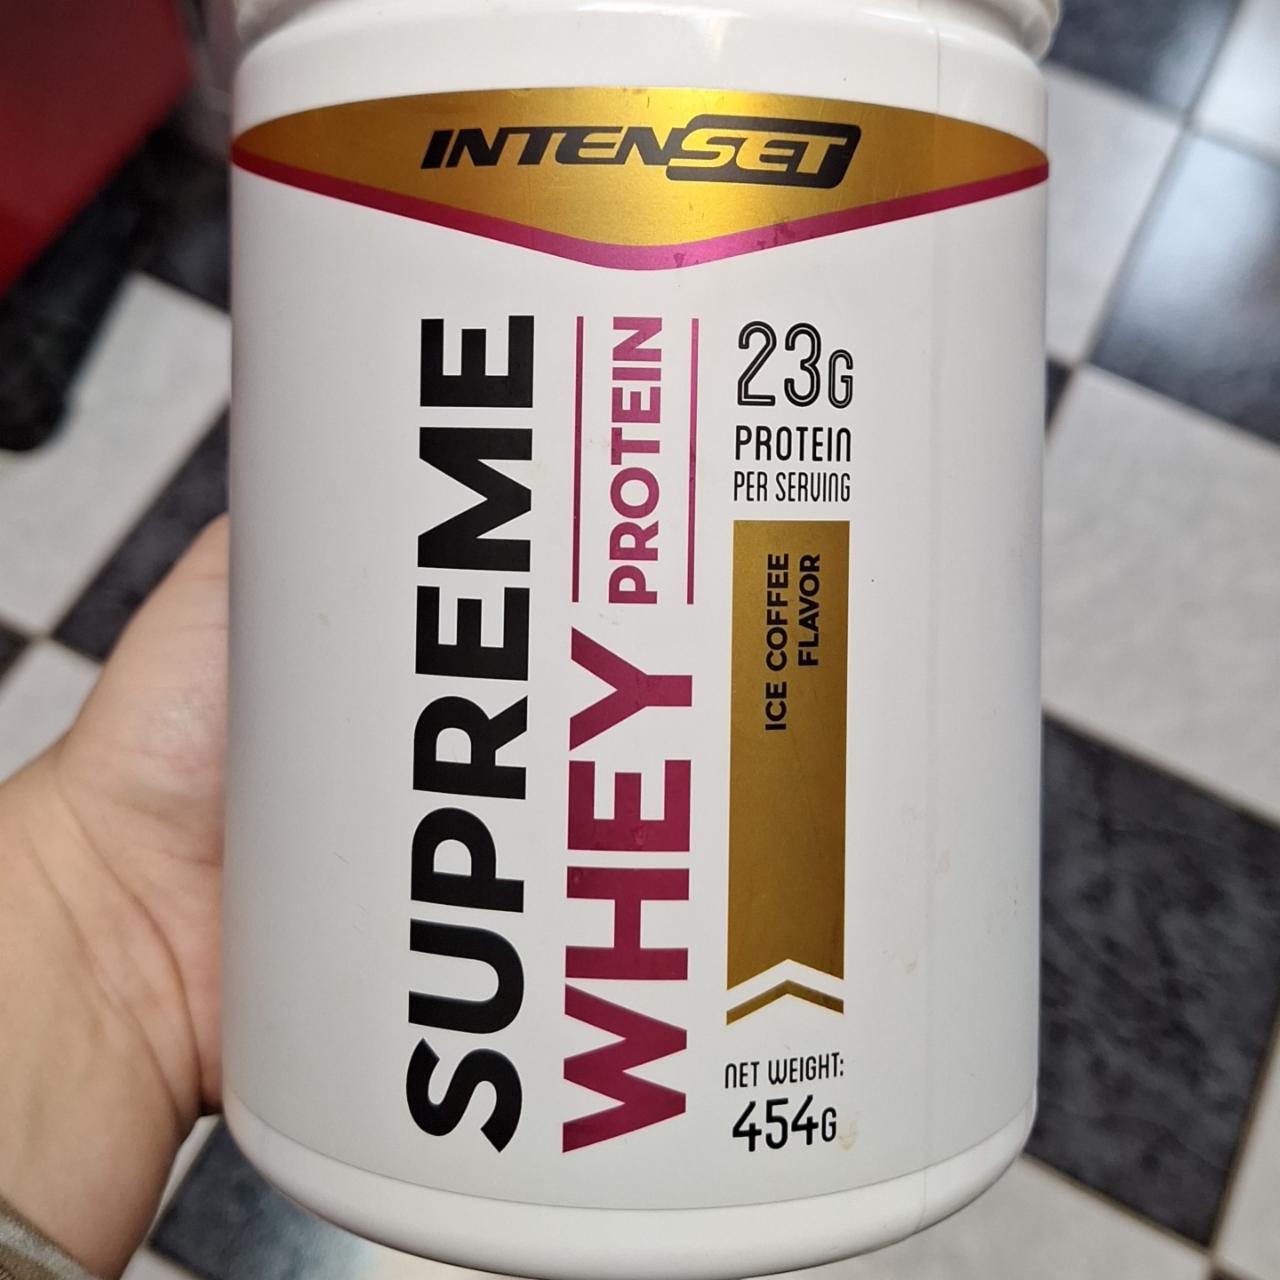 Képek - Supreme whey protein ice coffee flavor Intenset